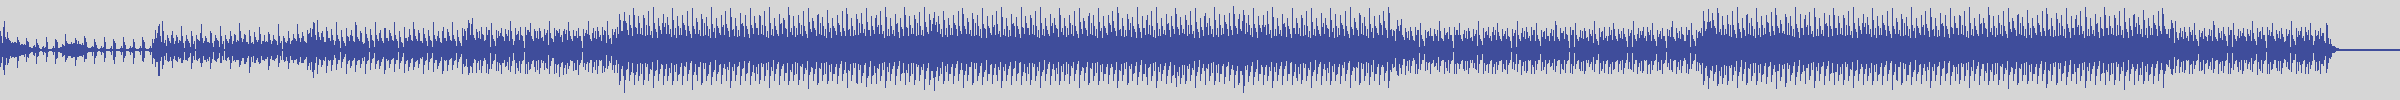 nf_boyz_records [NFY031] Alan Cry - Under Skill [Stellar Mix] audio wave form